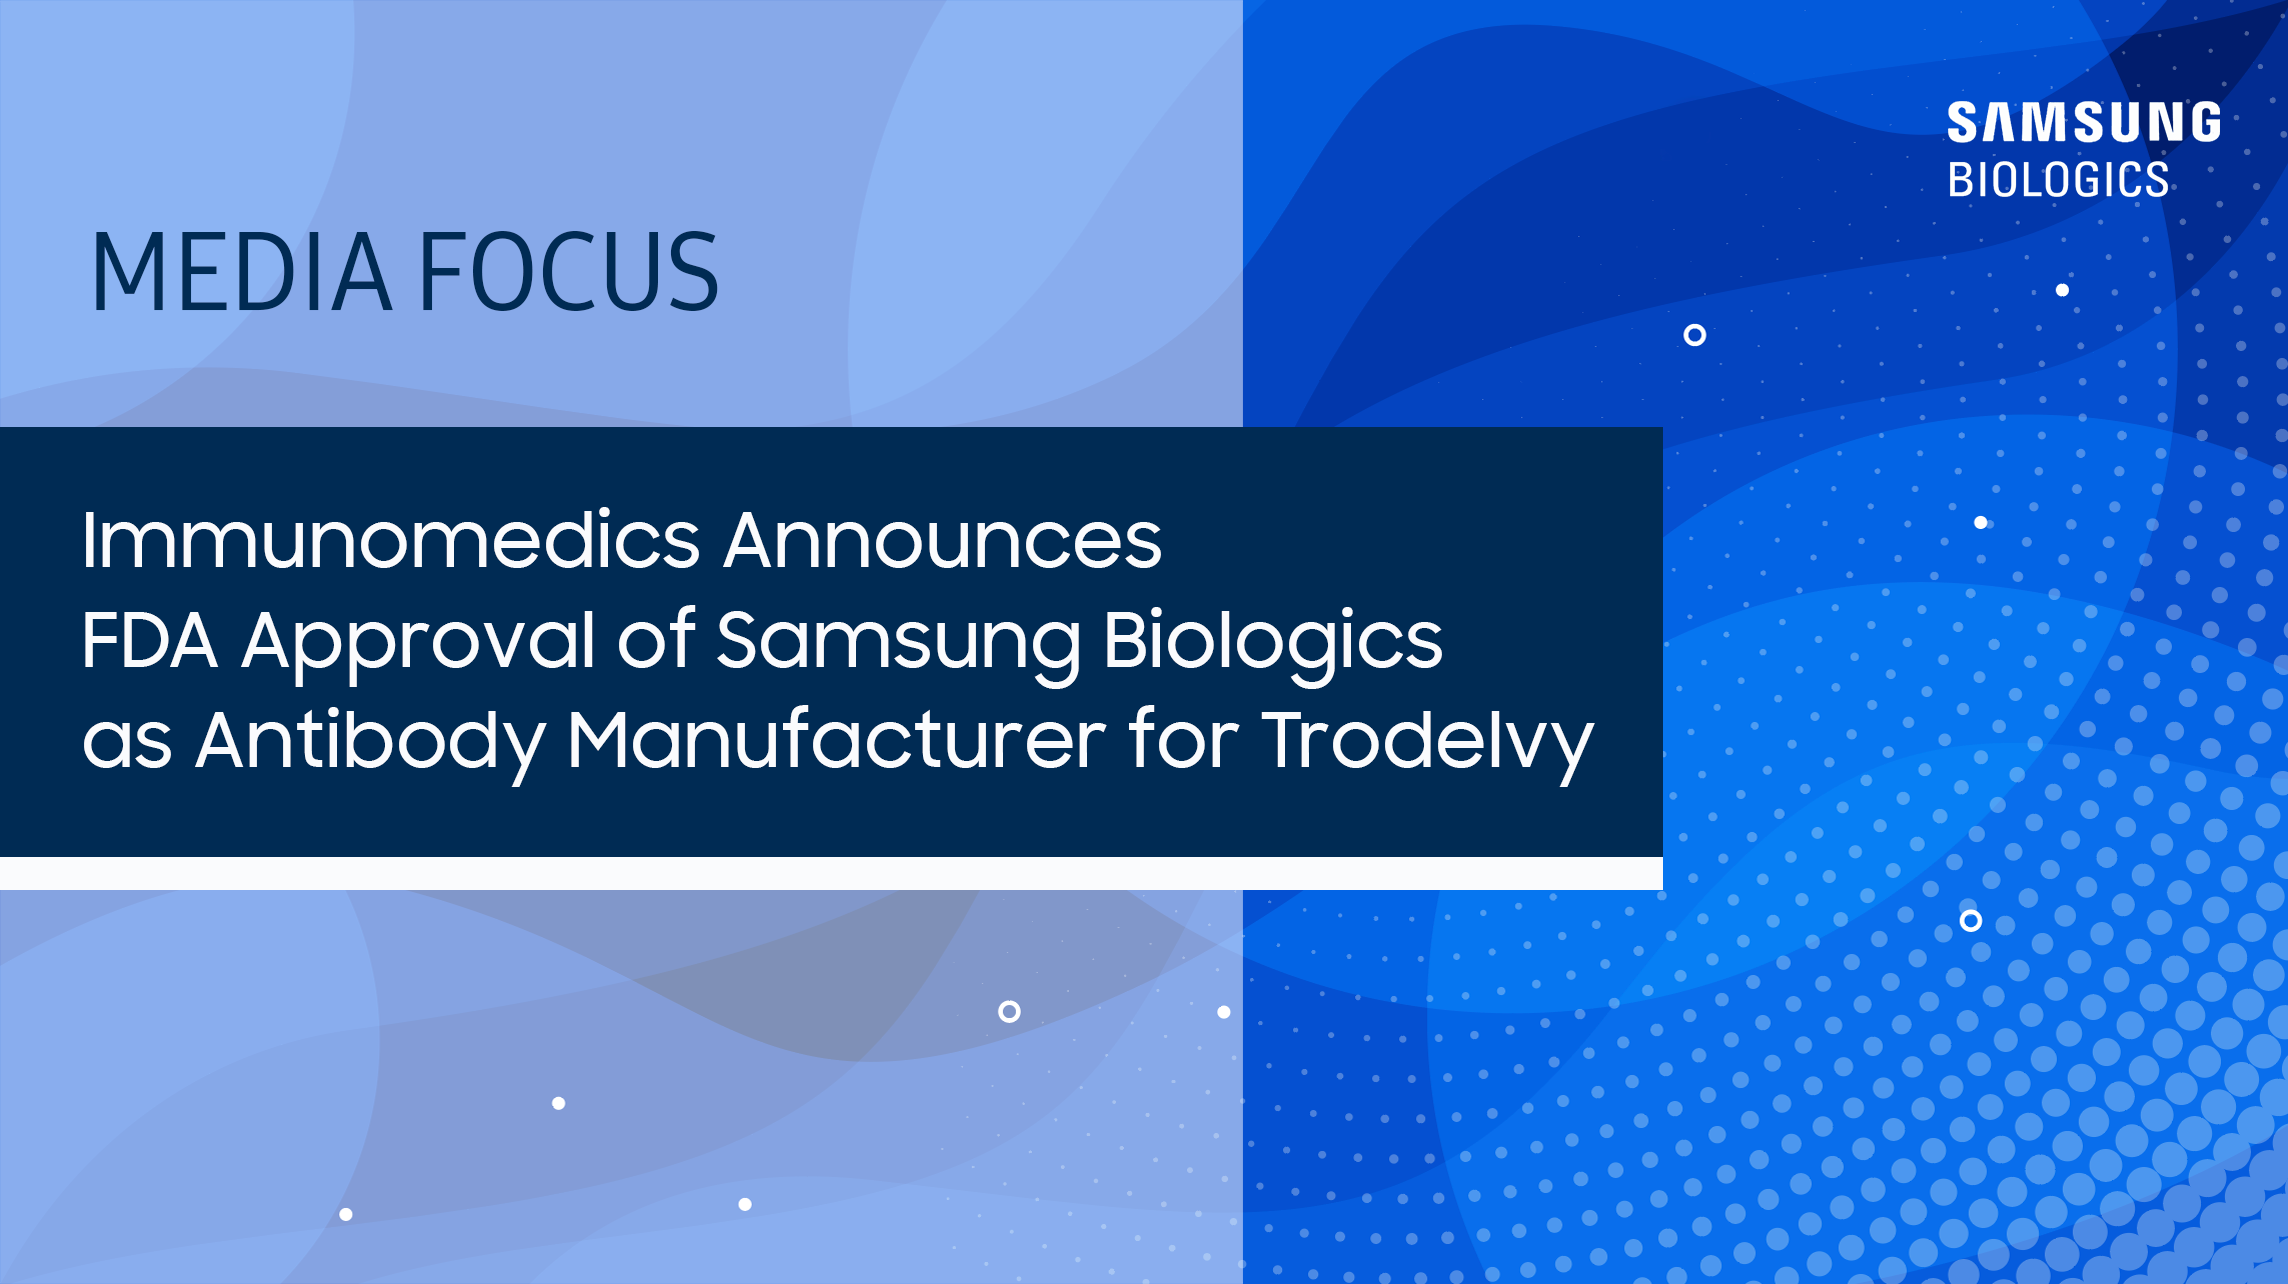 MEDIA FOCUS - Immunomedics Announces FDA Approval of Samsung Biologics as Antibody Manufacturer for Trodelvy